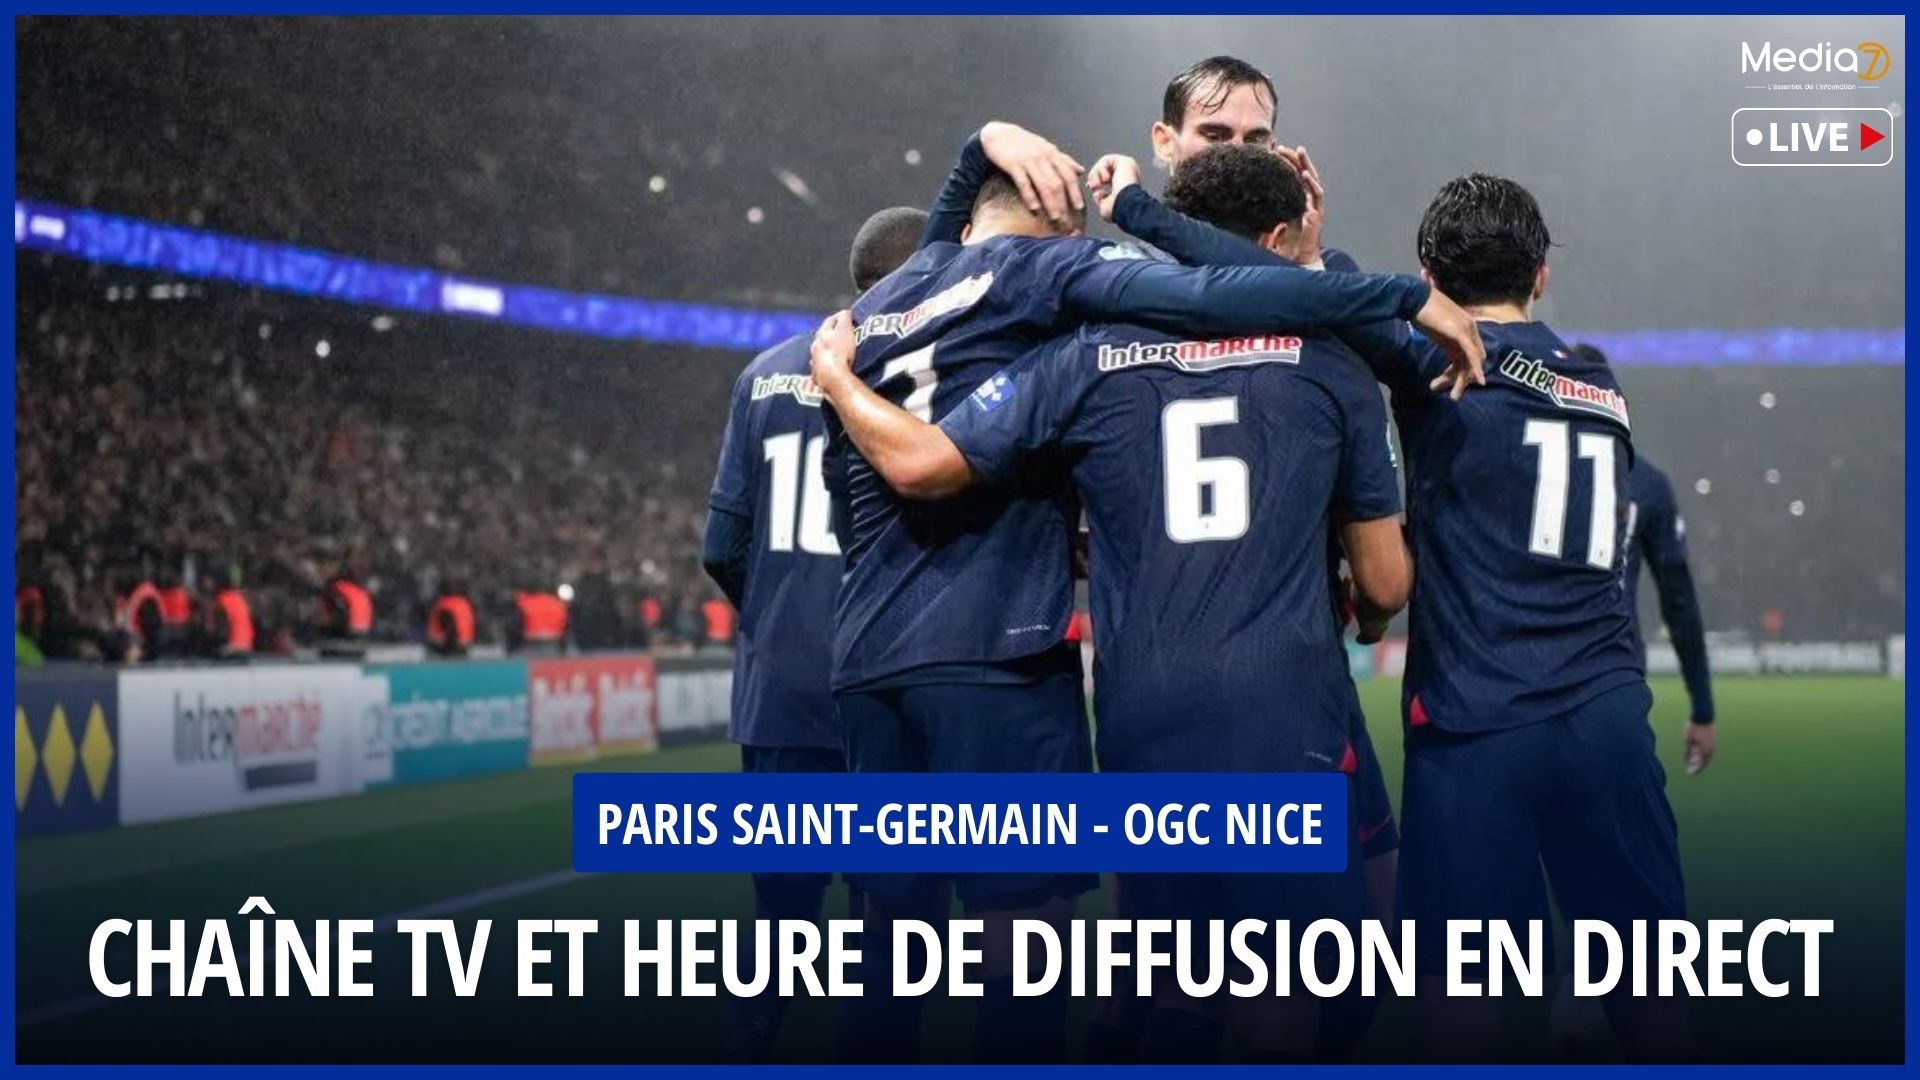 Watch the Paris Saint-Germain - OGC Nice Match Live: TV & Streaming Channel - Media7